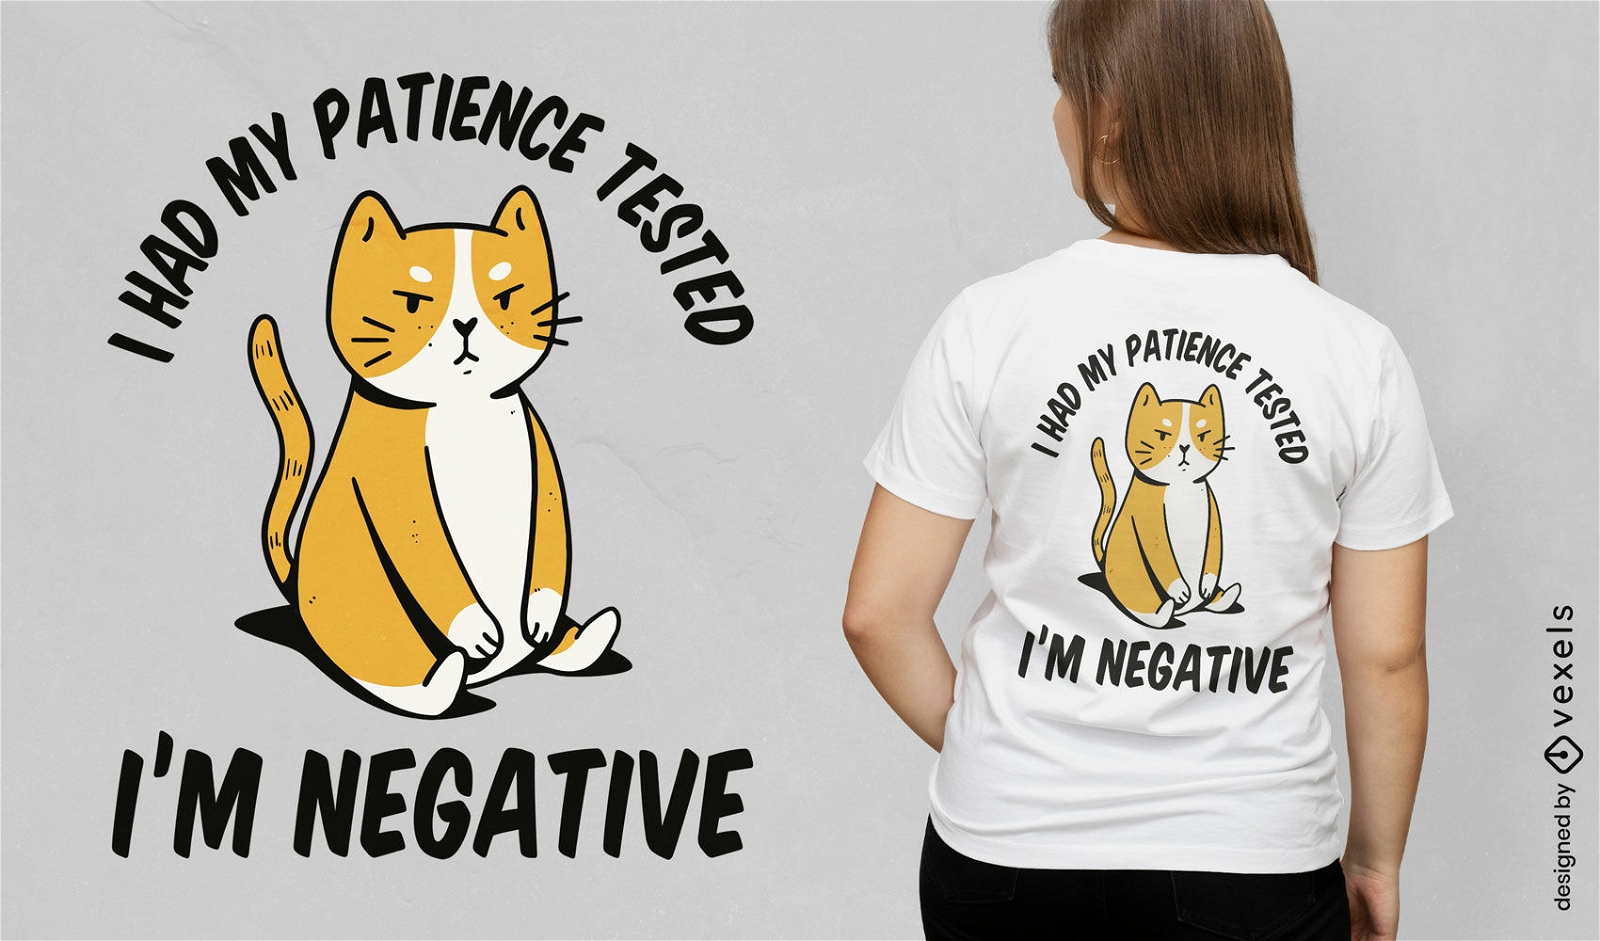 Dise?o de camiseta de gato divertido de prueba de paciencia negativa